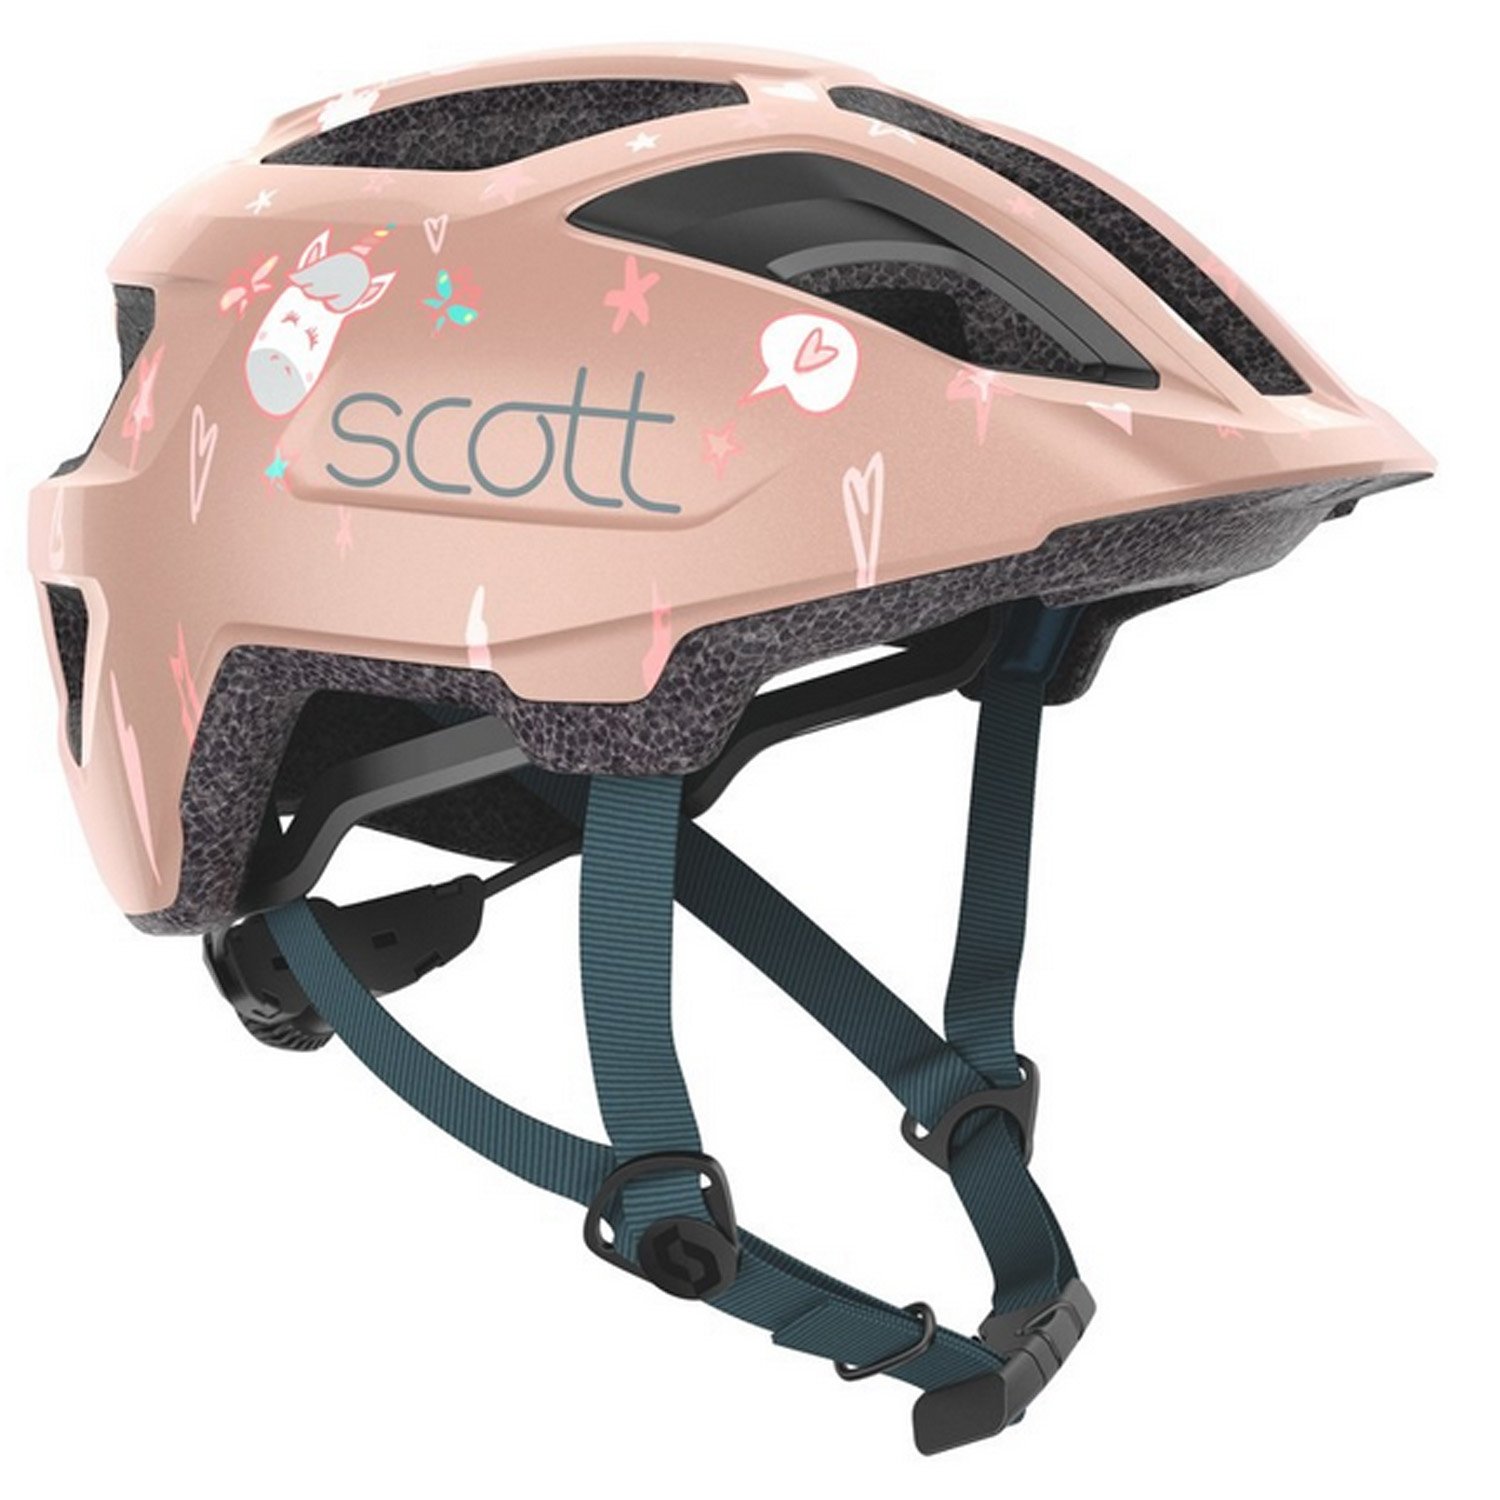 Велошлем SCOTT Kid Spunto (CE), crystal pink, ES275235-7174 шлем велосипедный scott spunto kid red orange onesize 50 56 см 2019 270115 1045